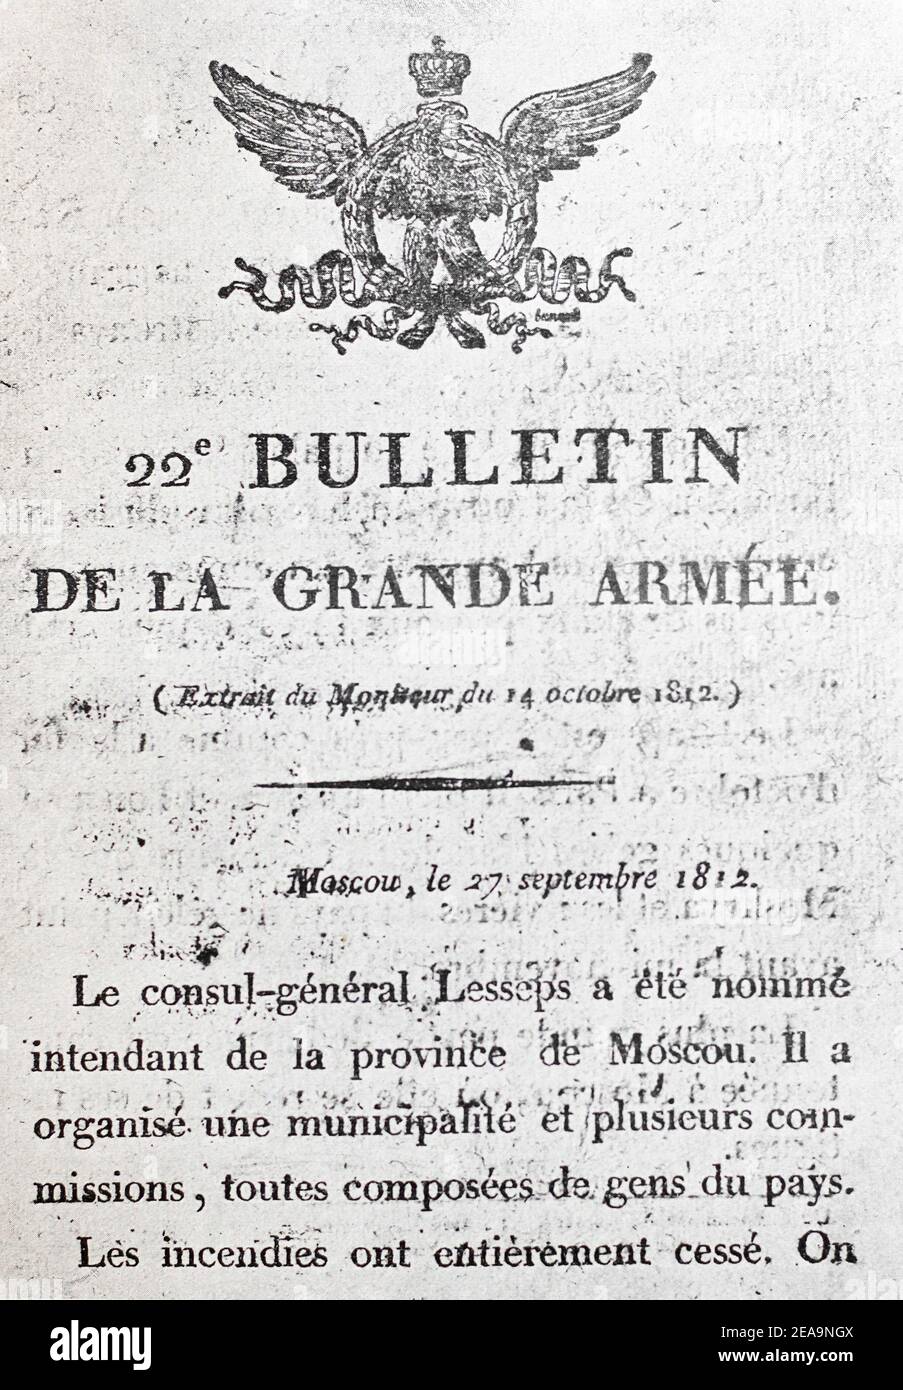 22nd Bulletin of the Grand Army (Bulletin de la Grande Armée). Stock Photo